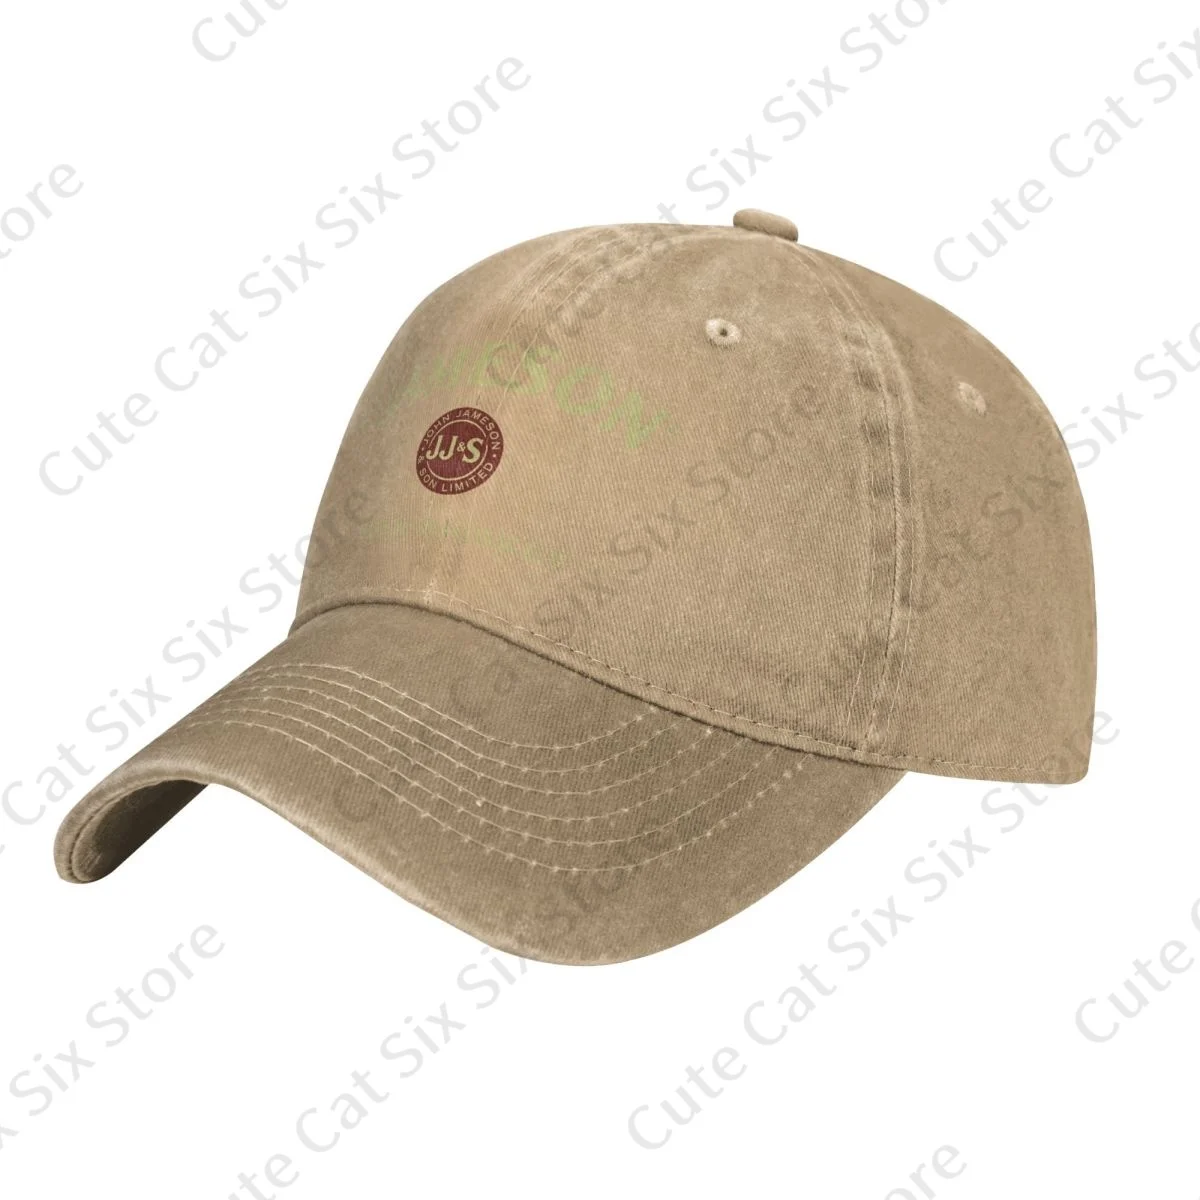 

Men and Woman's Vintage Jamesons Baseball Cowboy Hat Caps Adjustable Casual Cotton Sun Hats Unisex Visor Hats